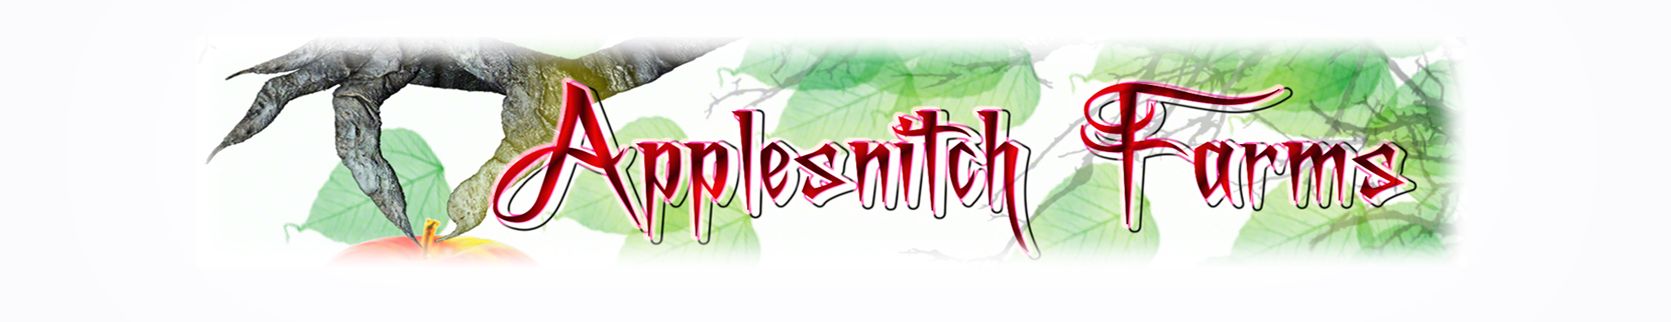 applesnitch_logo_s_banner_2.jpg